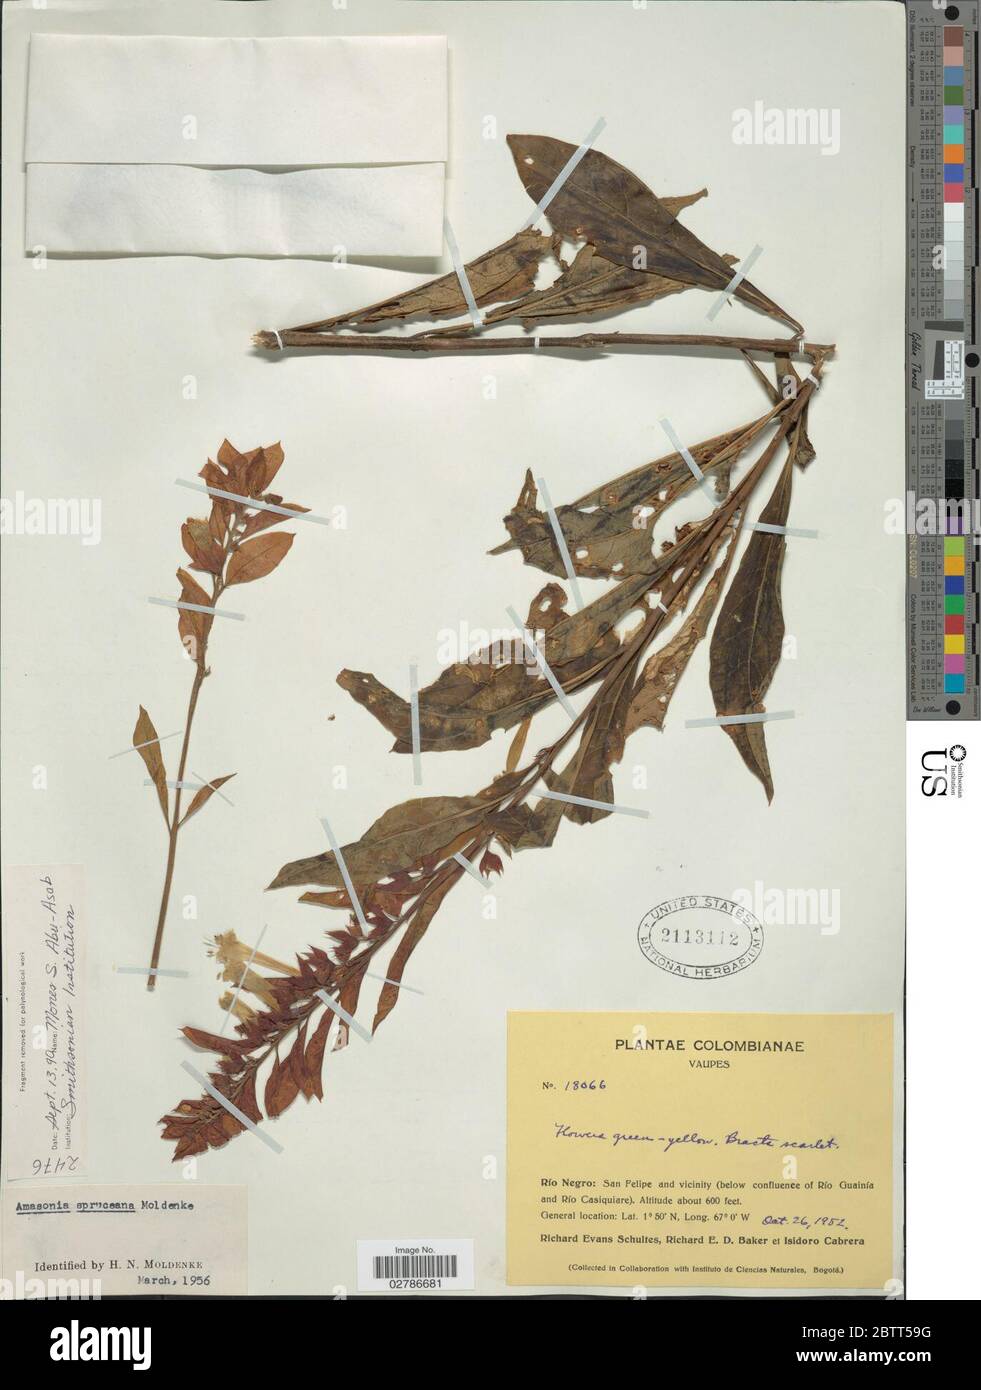 Amasonia spruceana Moldenke. Stock Photo